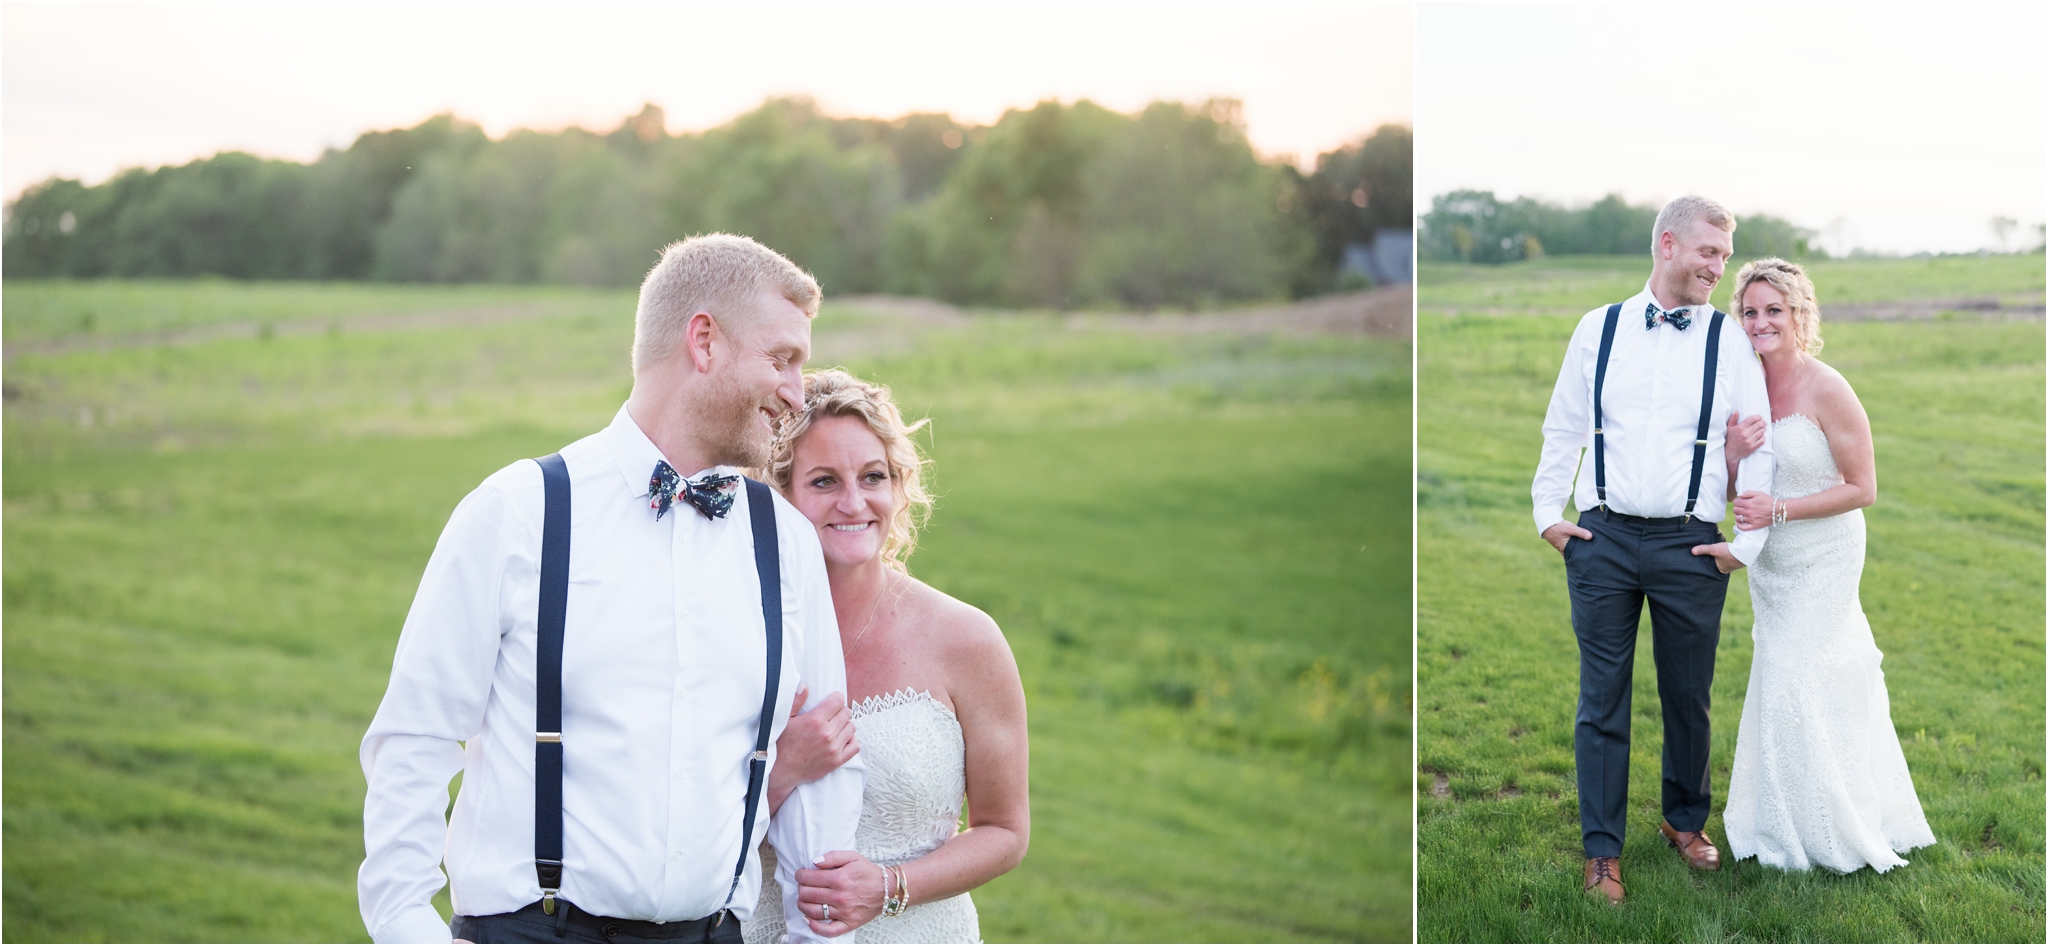 Lindley Farmstead at Chatham Hills | Sarah and Rachel Wedding Photographers | Westfield, Indiana wedding | sunset photos